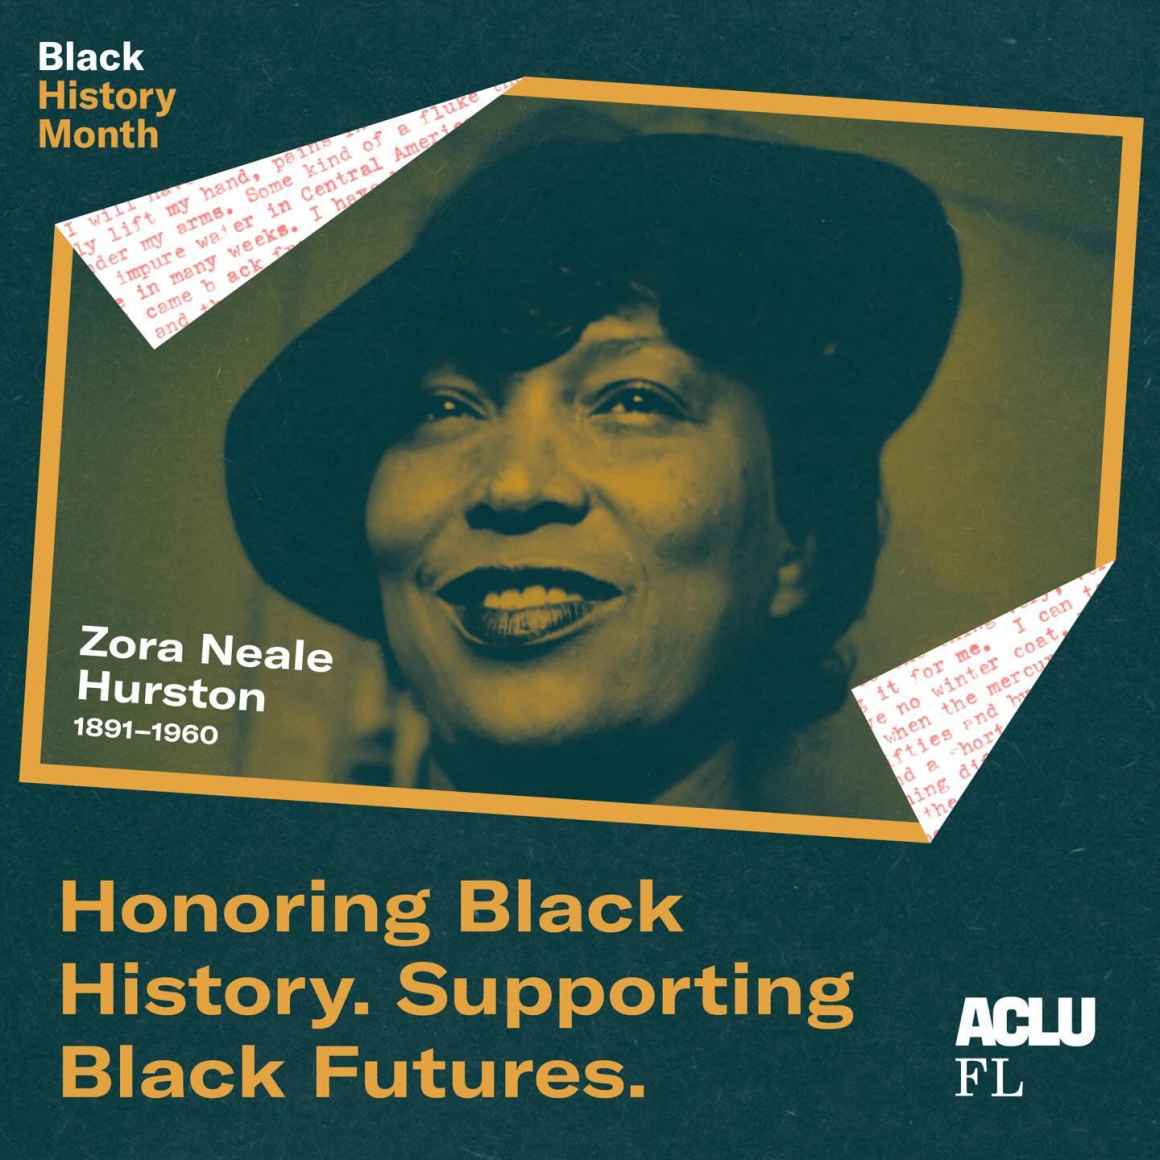 Black History Month. Zora Neale Hurston. Honoring Black History. Supporting Black Futures. ACLU FL